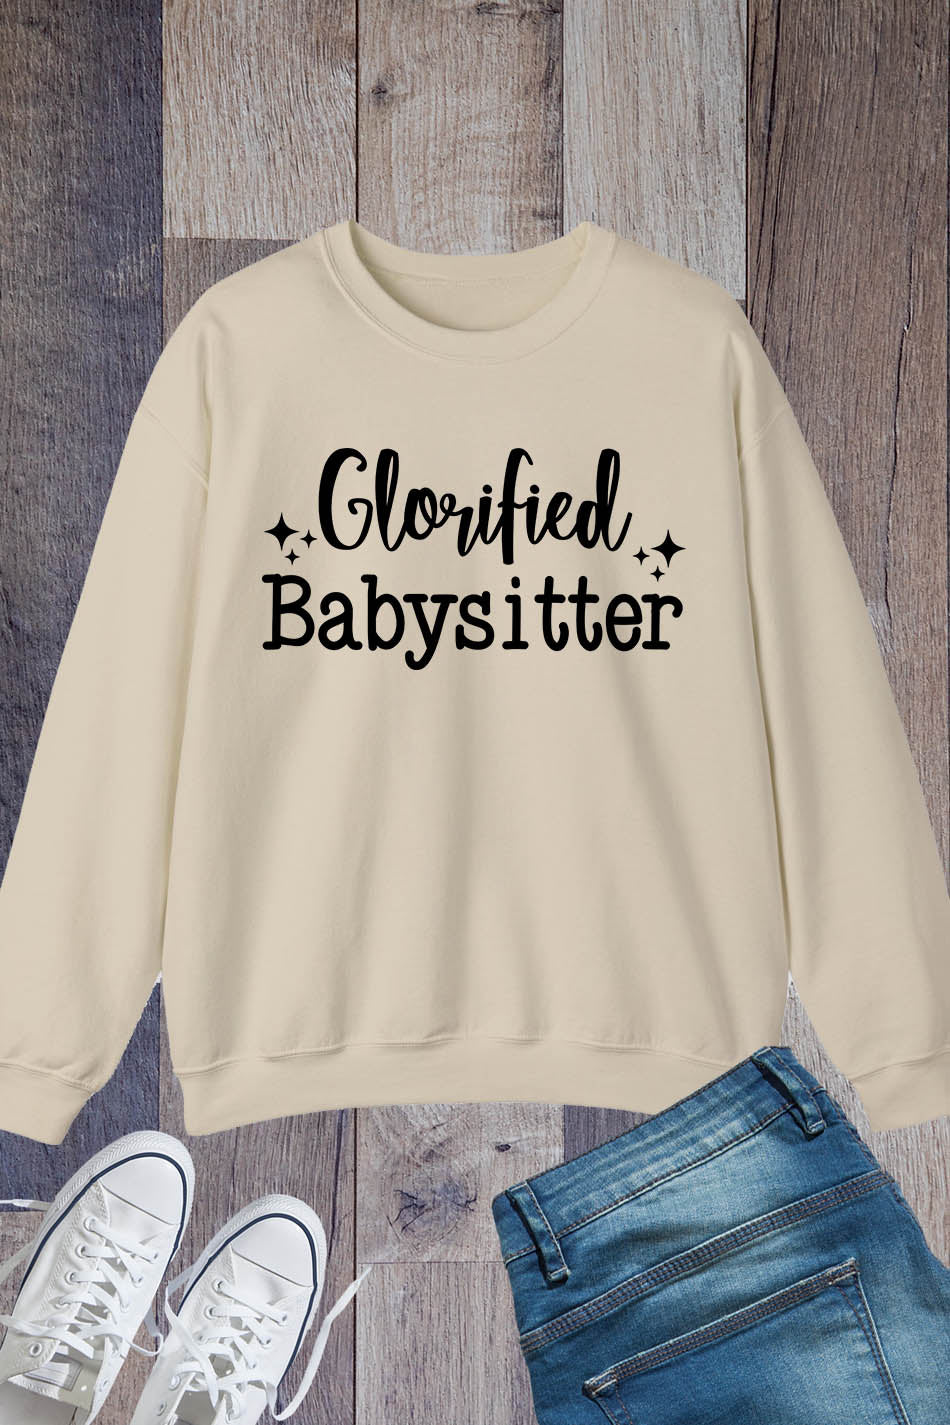 Glorious Babysitter Sweatshirt Gigi Sweatshirt